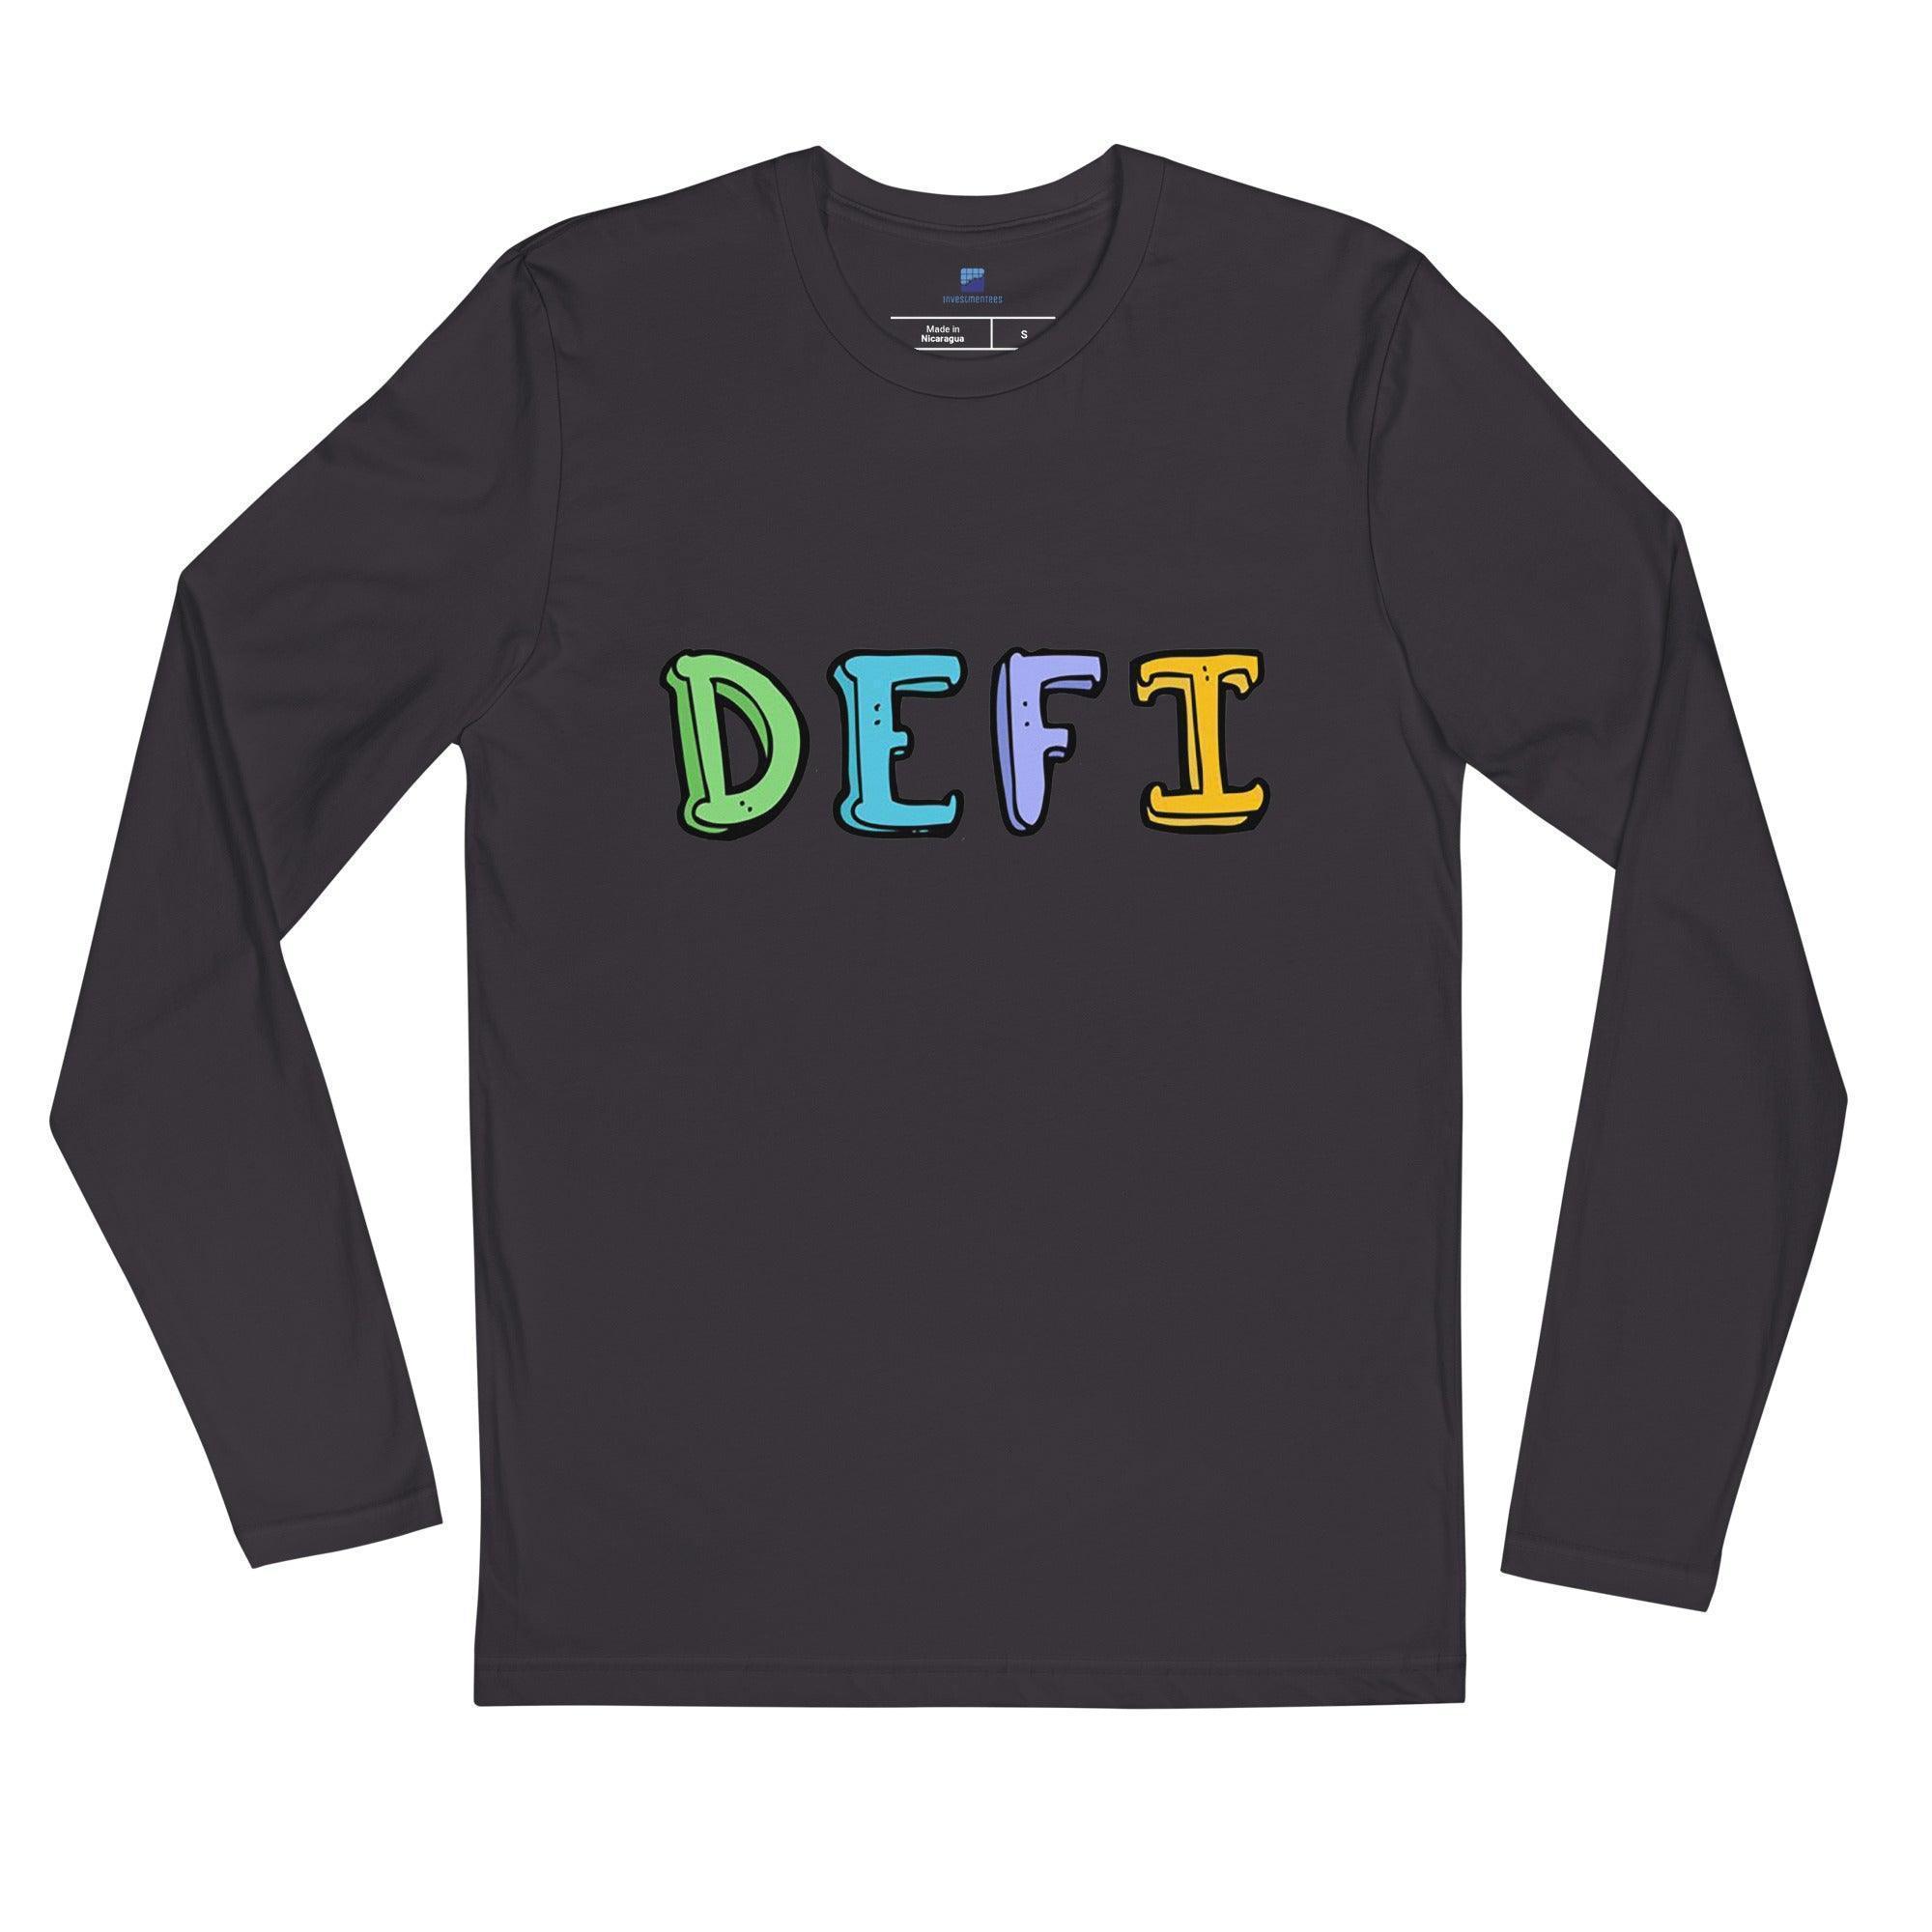 Defi | Decentralized Finance Long Sleeve T-Shirt - InvestmenTees